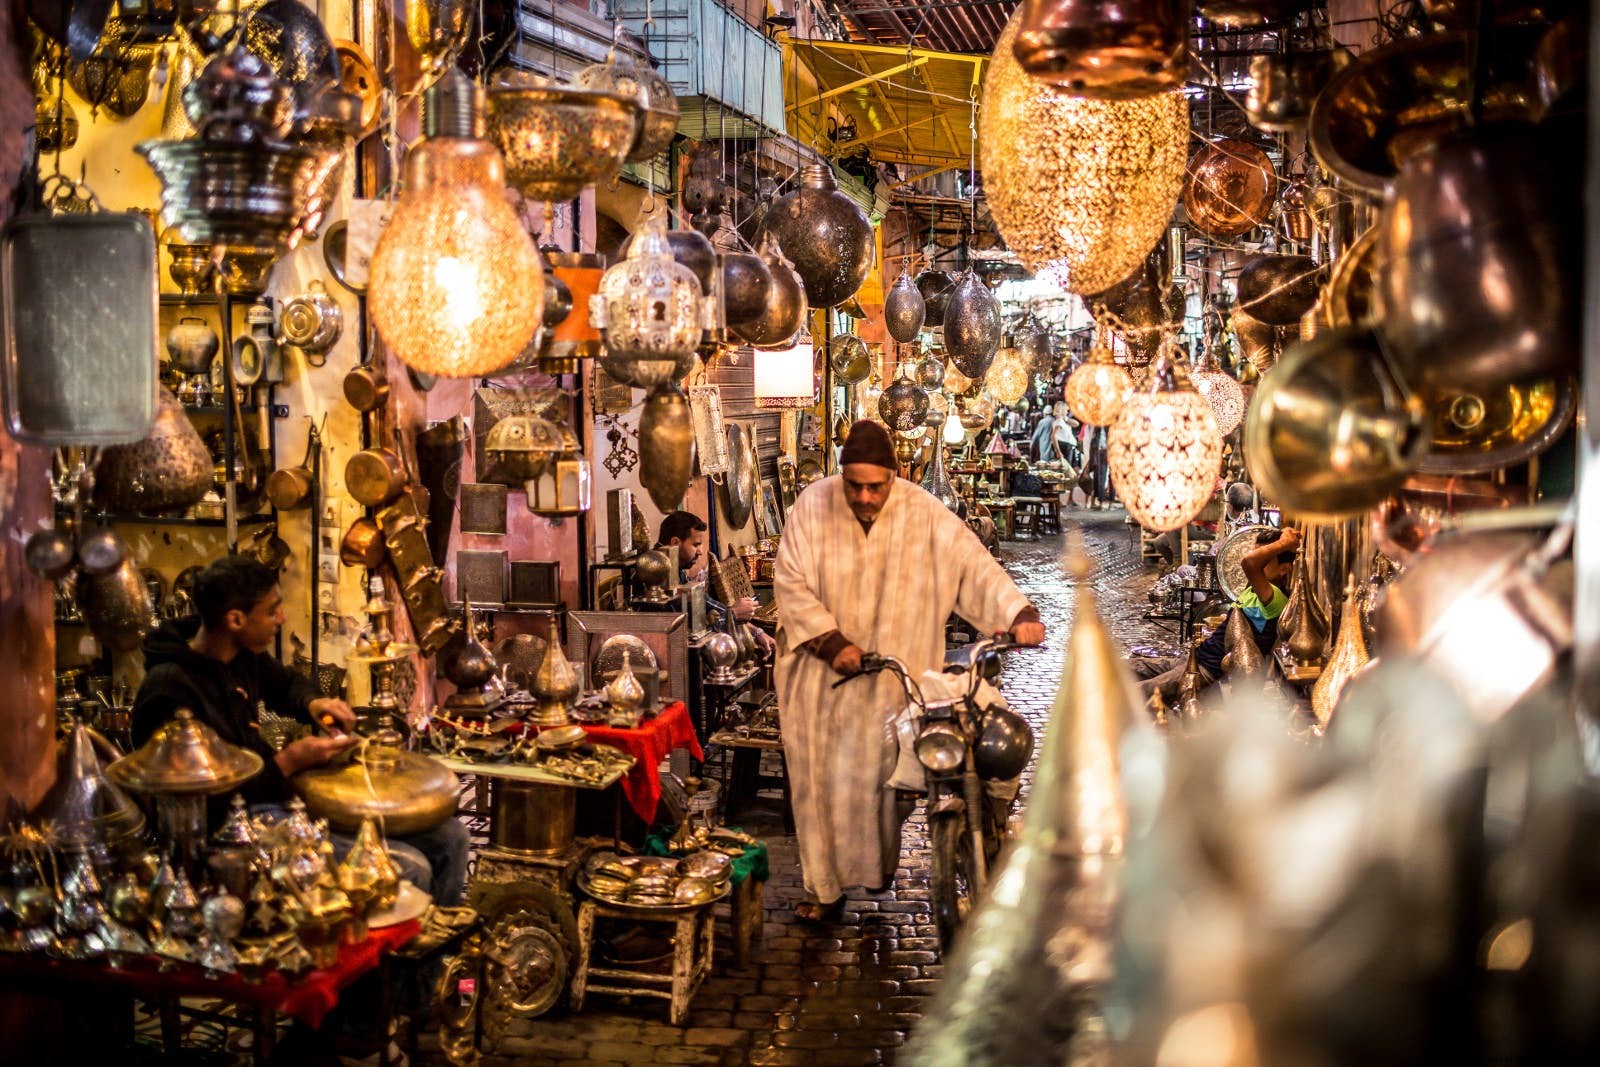 Shopping à Essaouira :où acheter quoi 